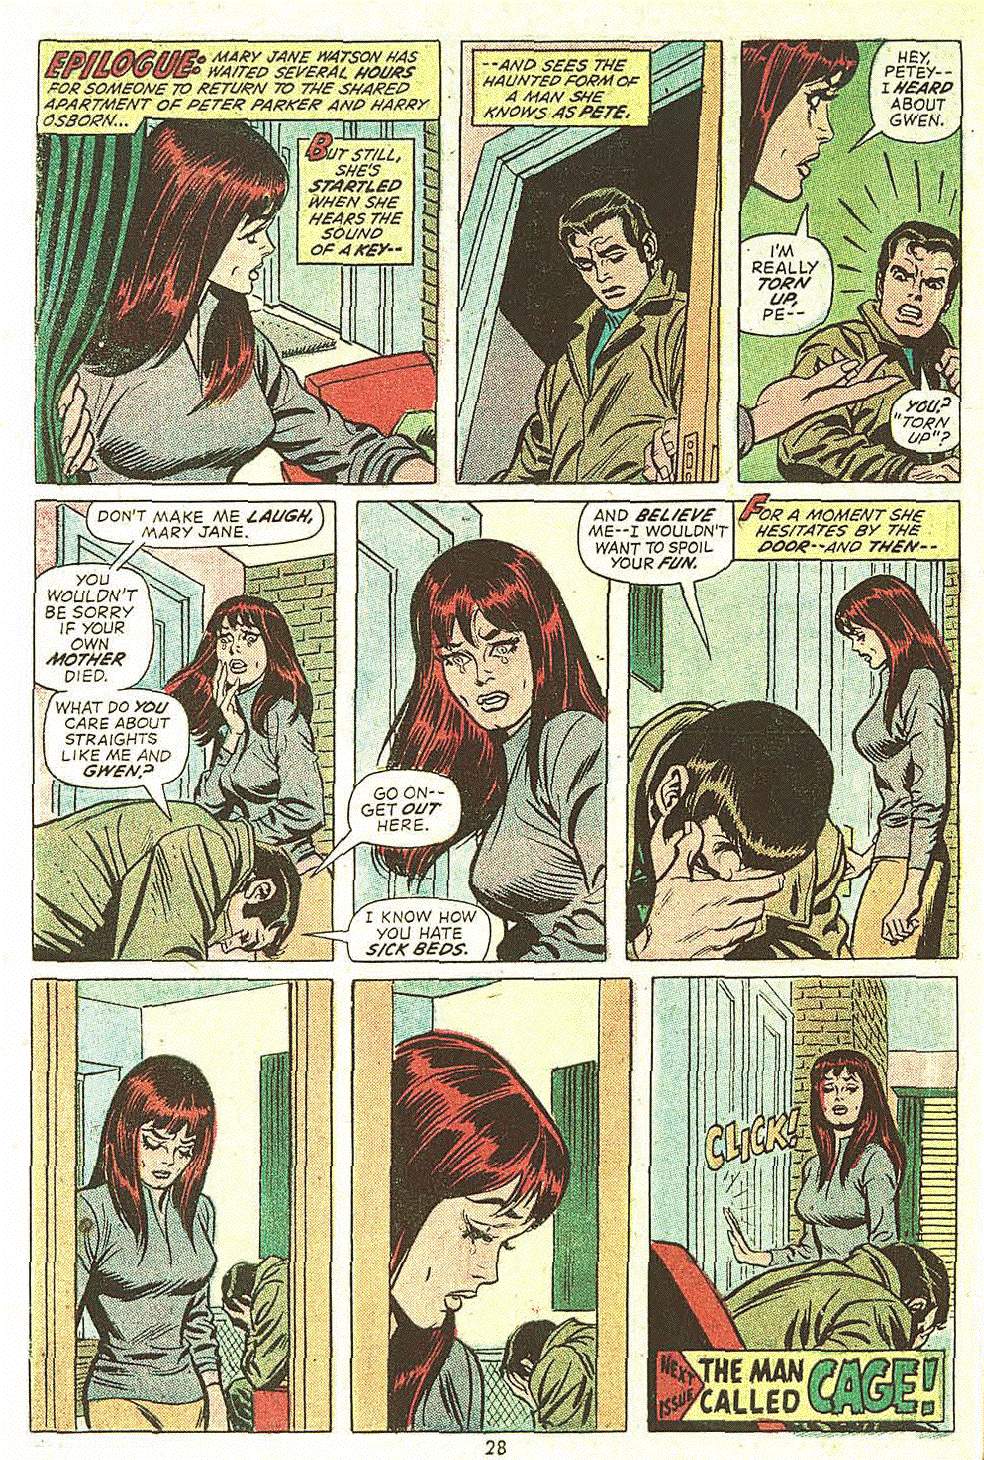 spiderman comic strips xxx 1